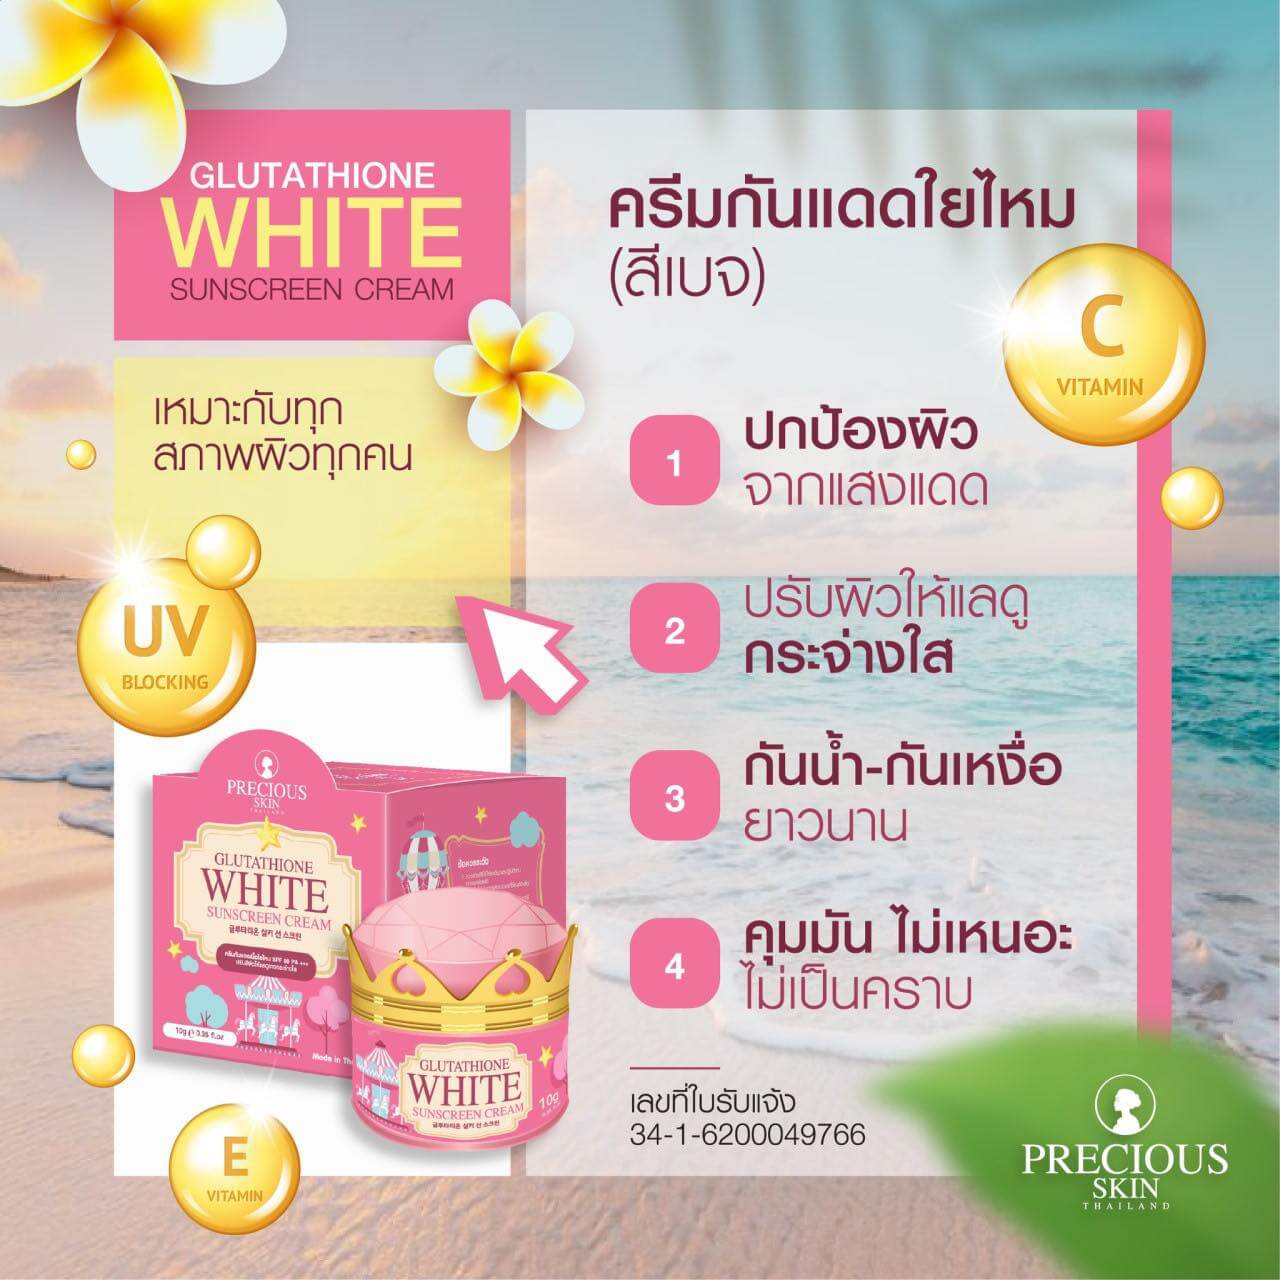 Precious Skin Thailand Glutathione White Sunscreen Cream 10 g   ครีมกันแดดใยไหมผสมกลูต้า SPF50+ PA+++ บางเบาไม่เหนอะ พร้อมควบคุมความมันกระชับรูขุมขน